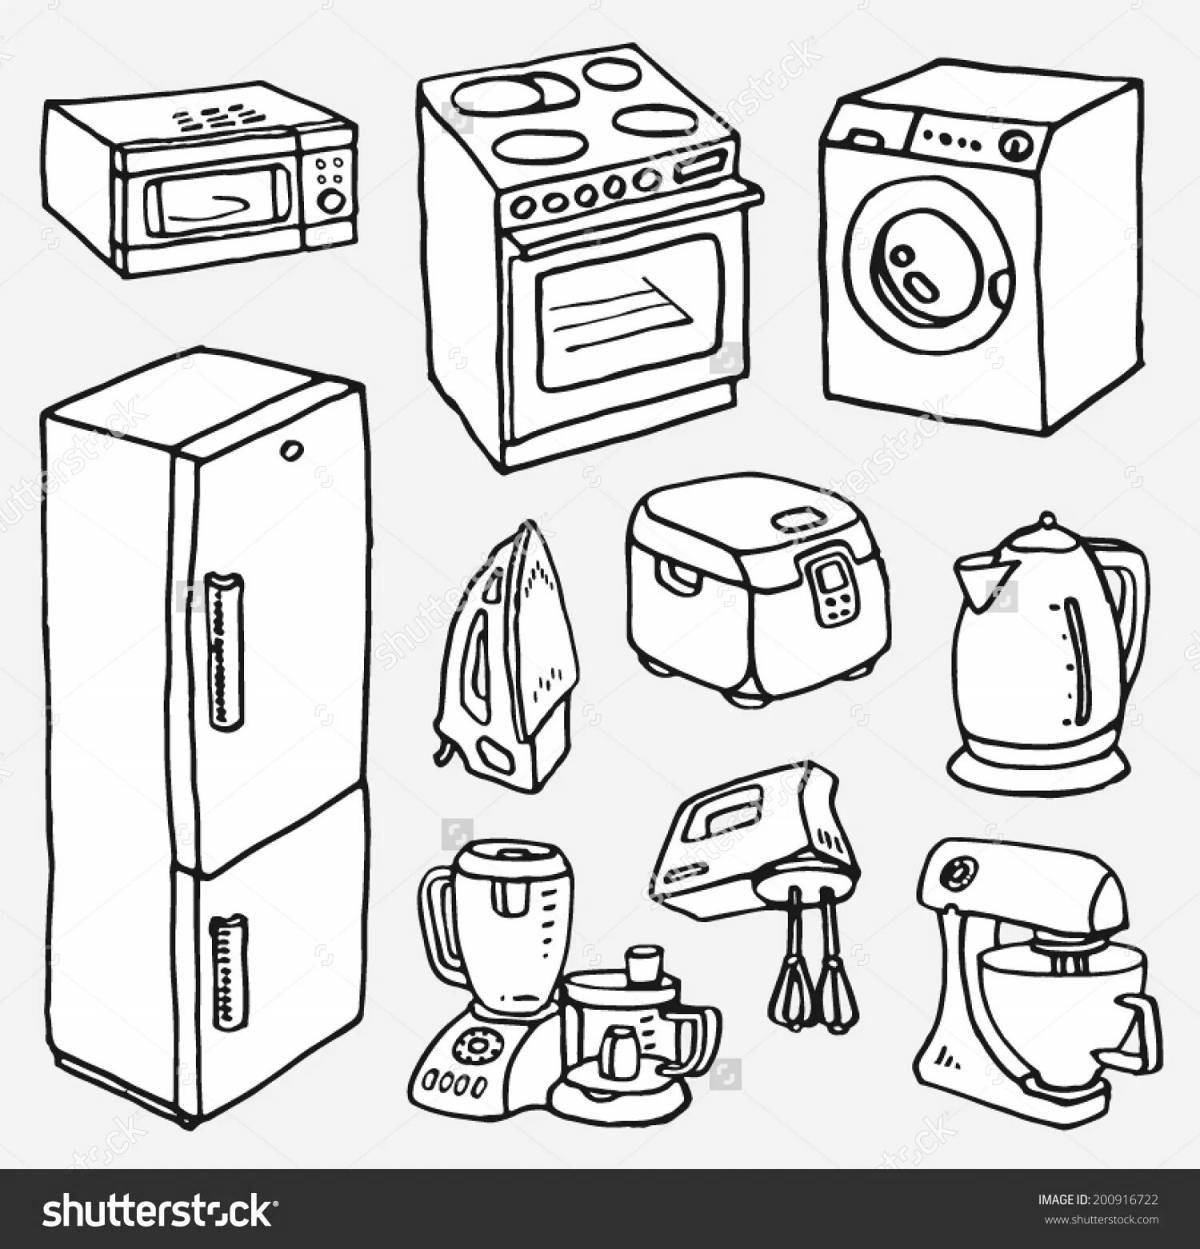 Children's electrical appliances #18